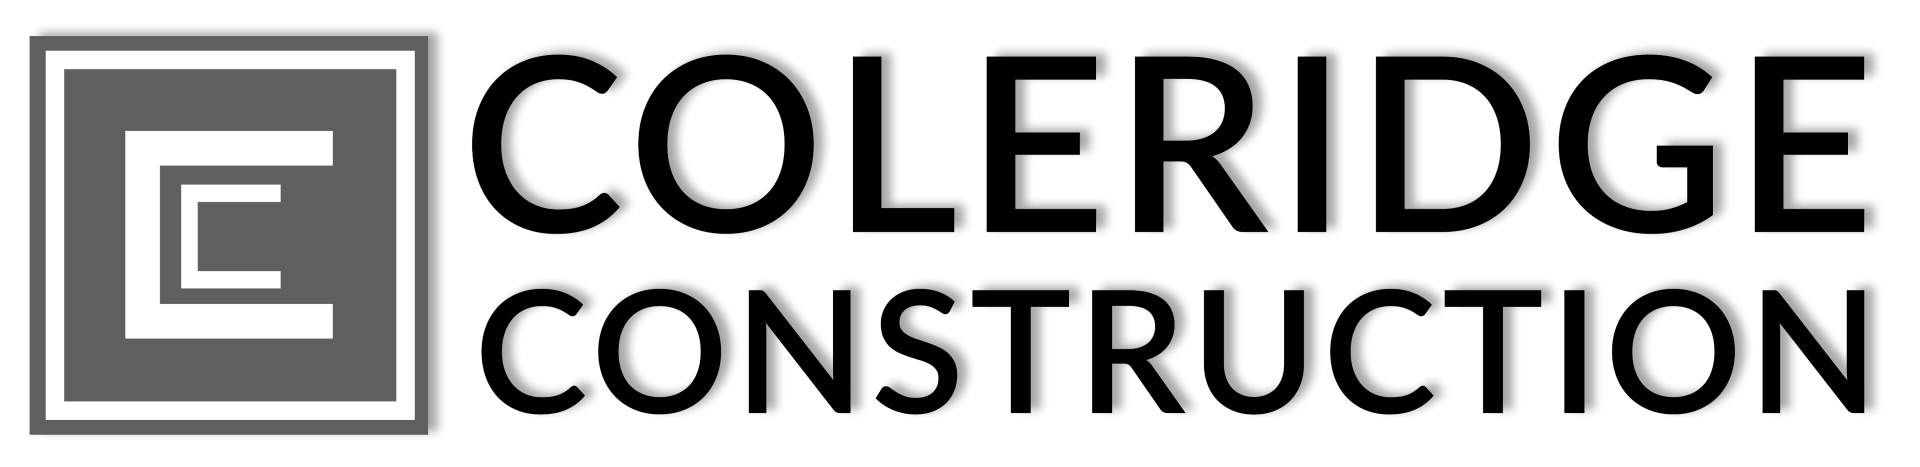 Large Coleridge Construction logo